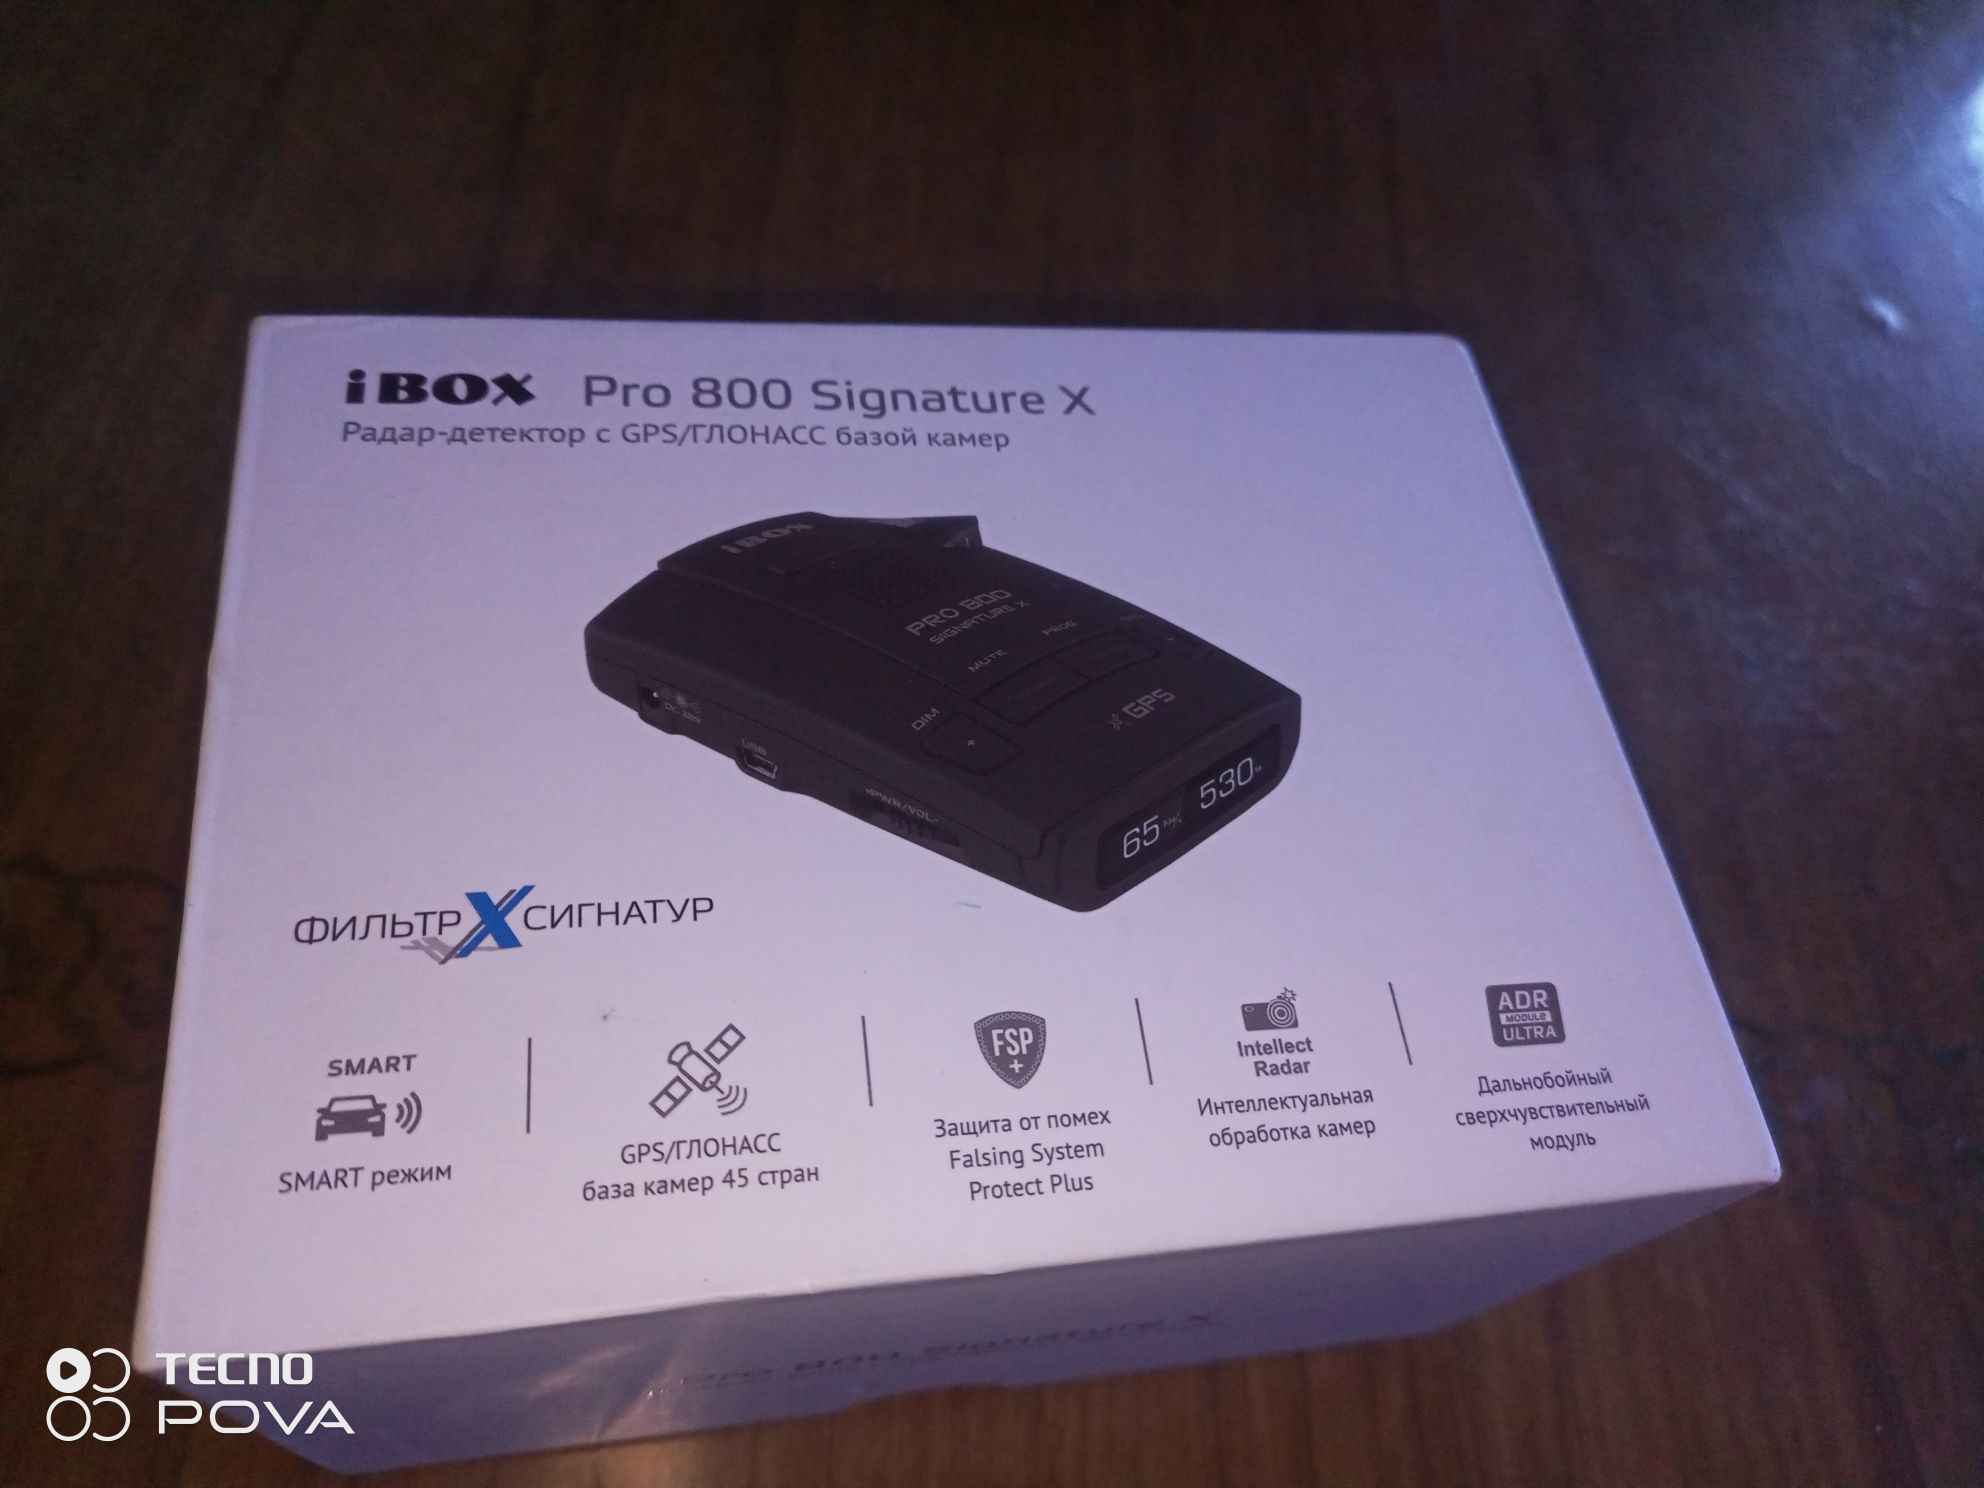 iBOX Pro800 Signature X